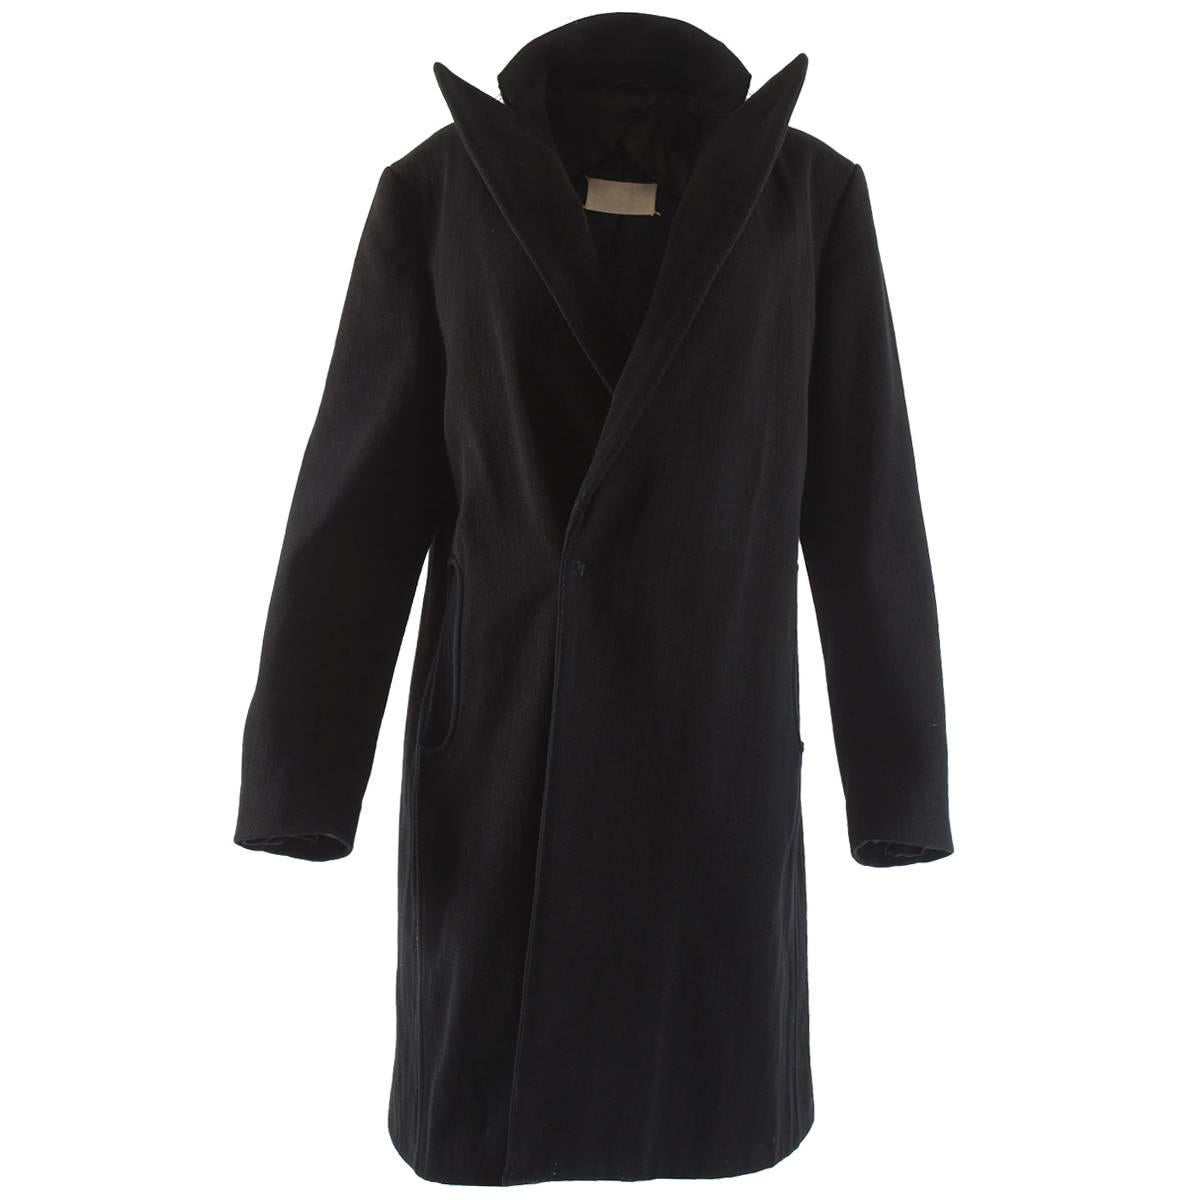 Martin Margiela black wool coat with exaggerated collar, fw 1996